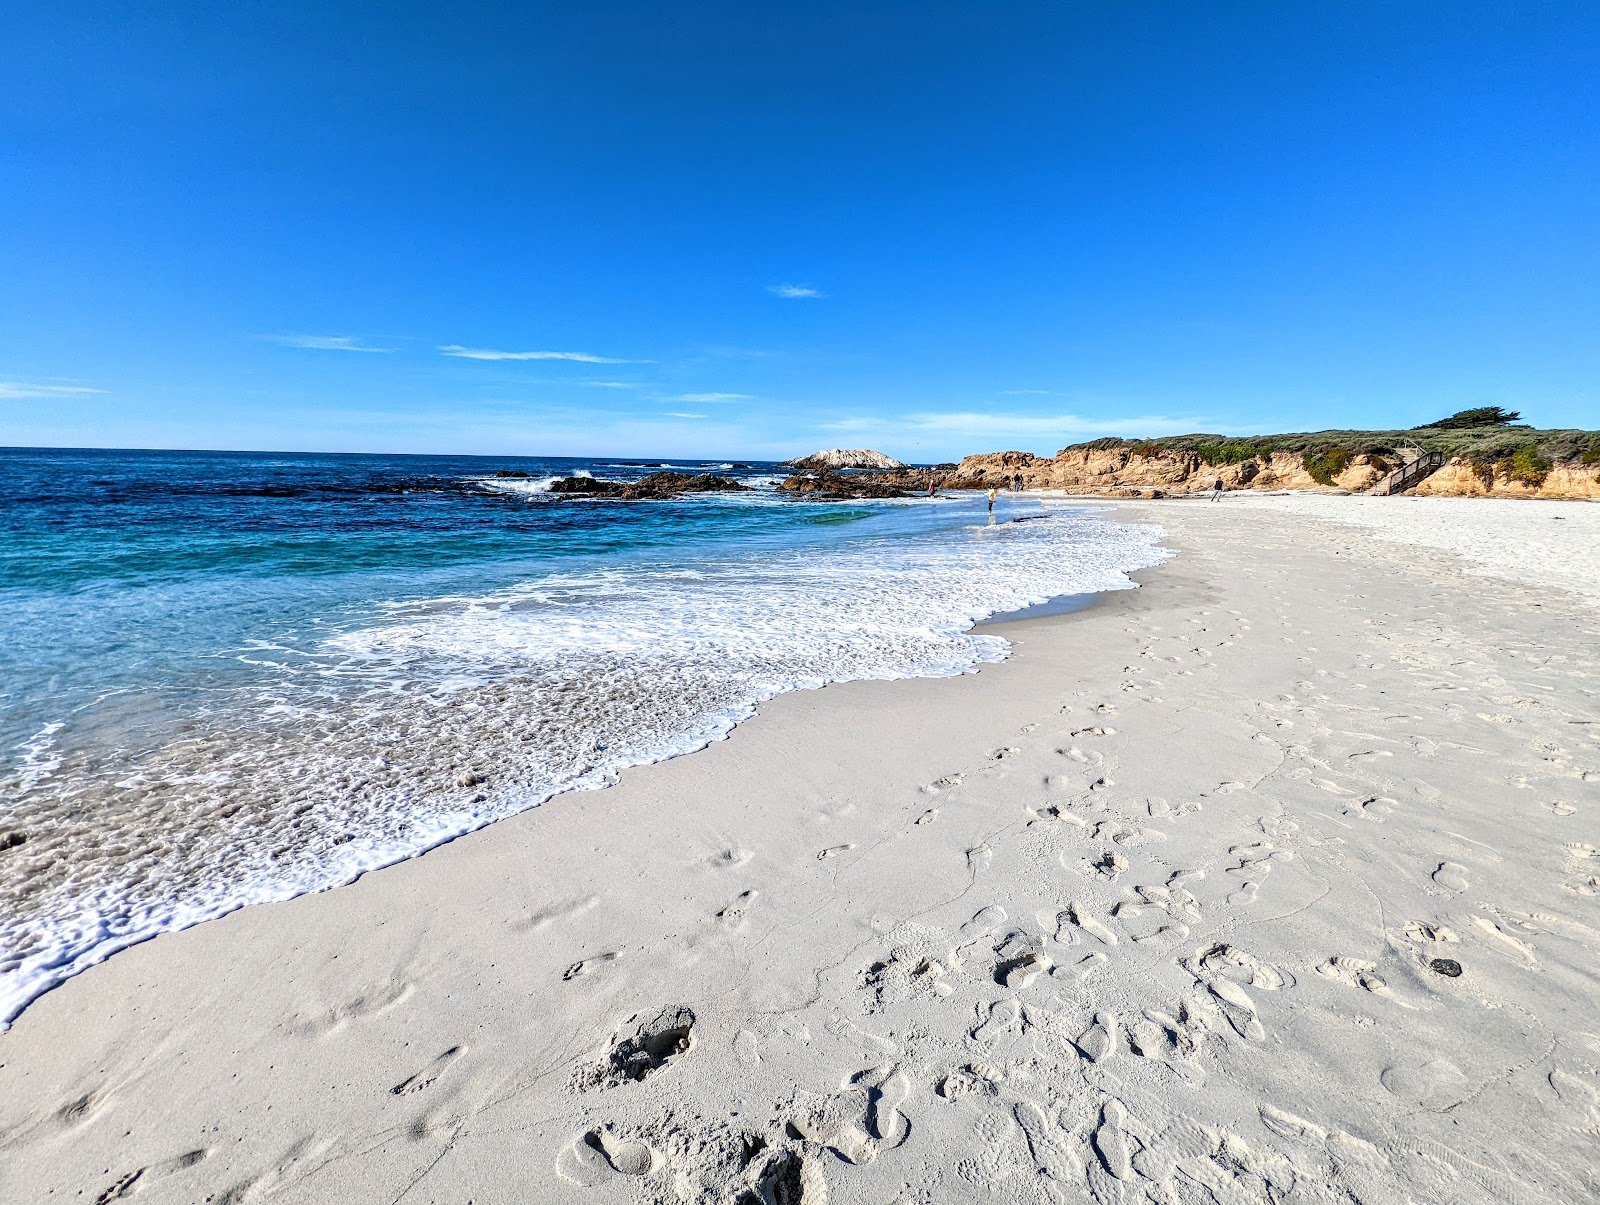 Foto di Seal Rock Beach con una superficie del sabbia bianca